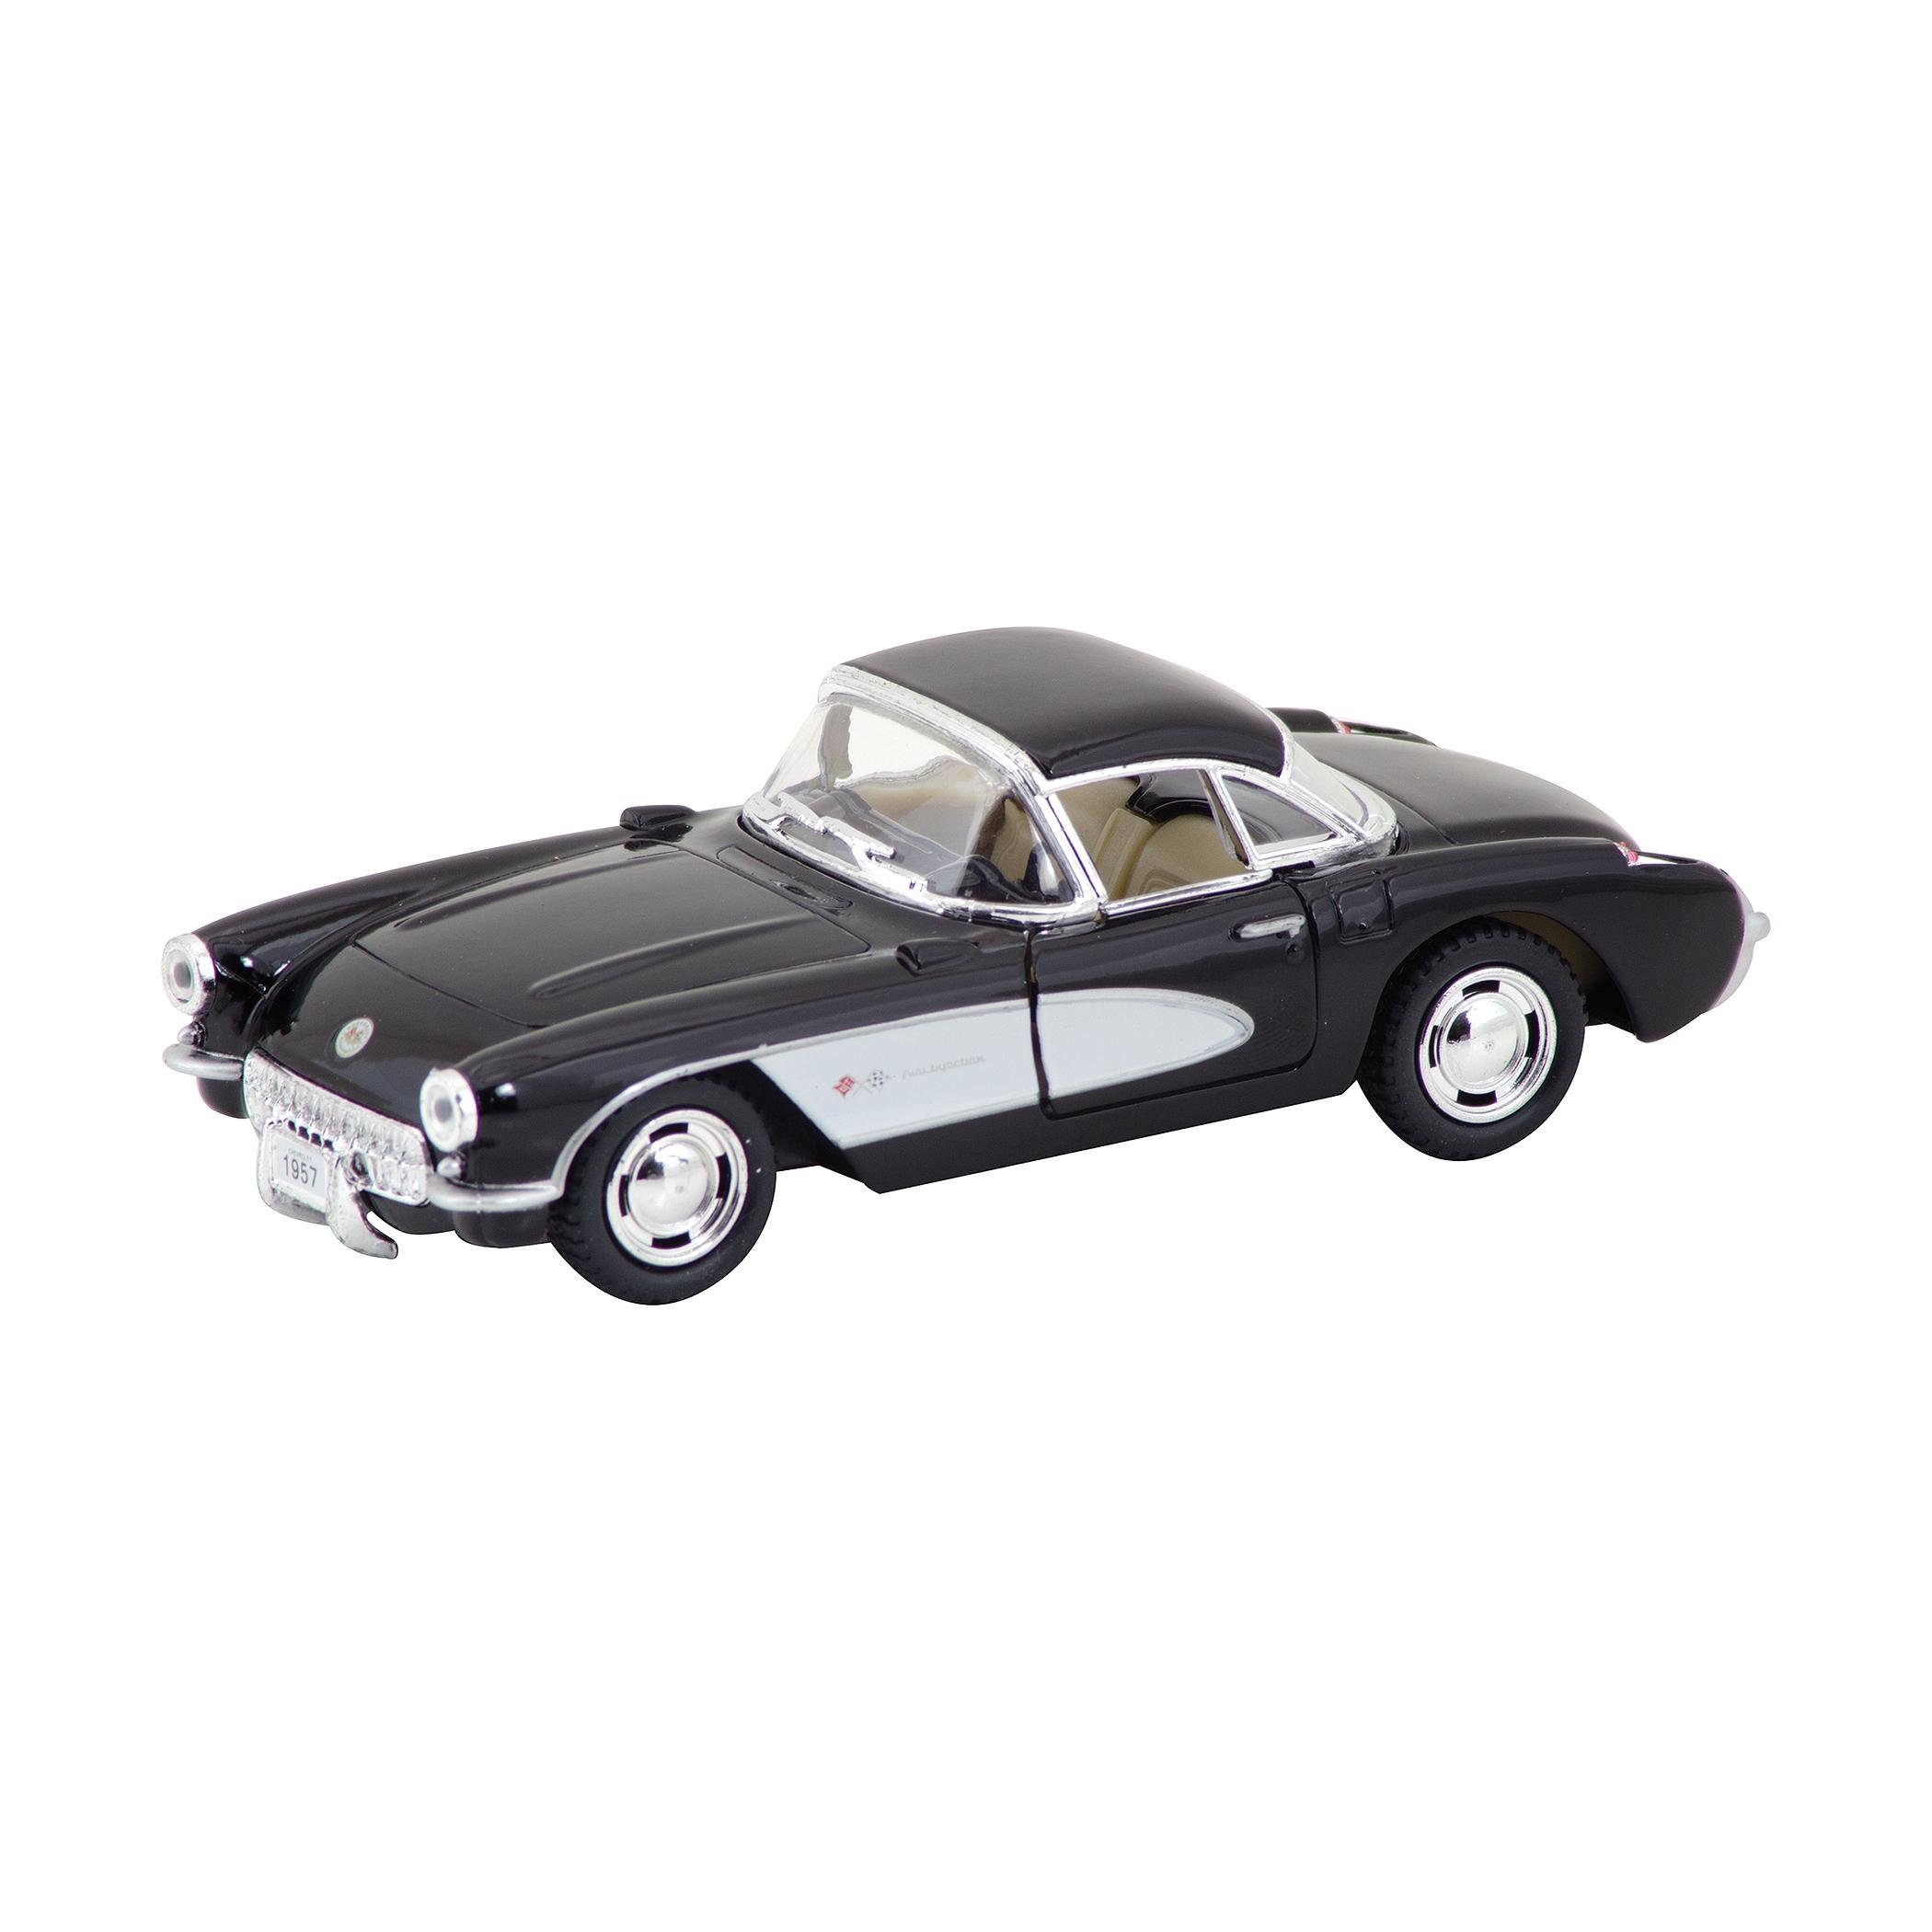  Diecast 1957 Corvette Toy